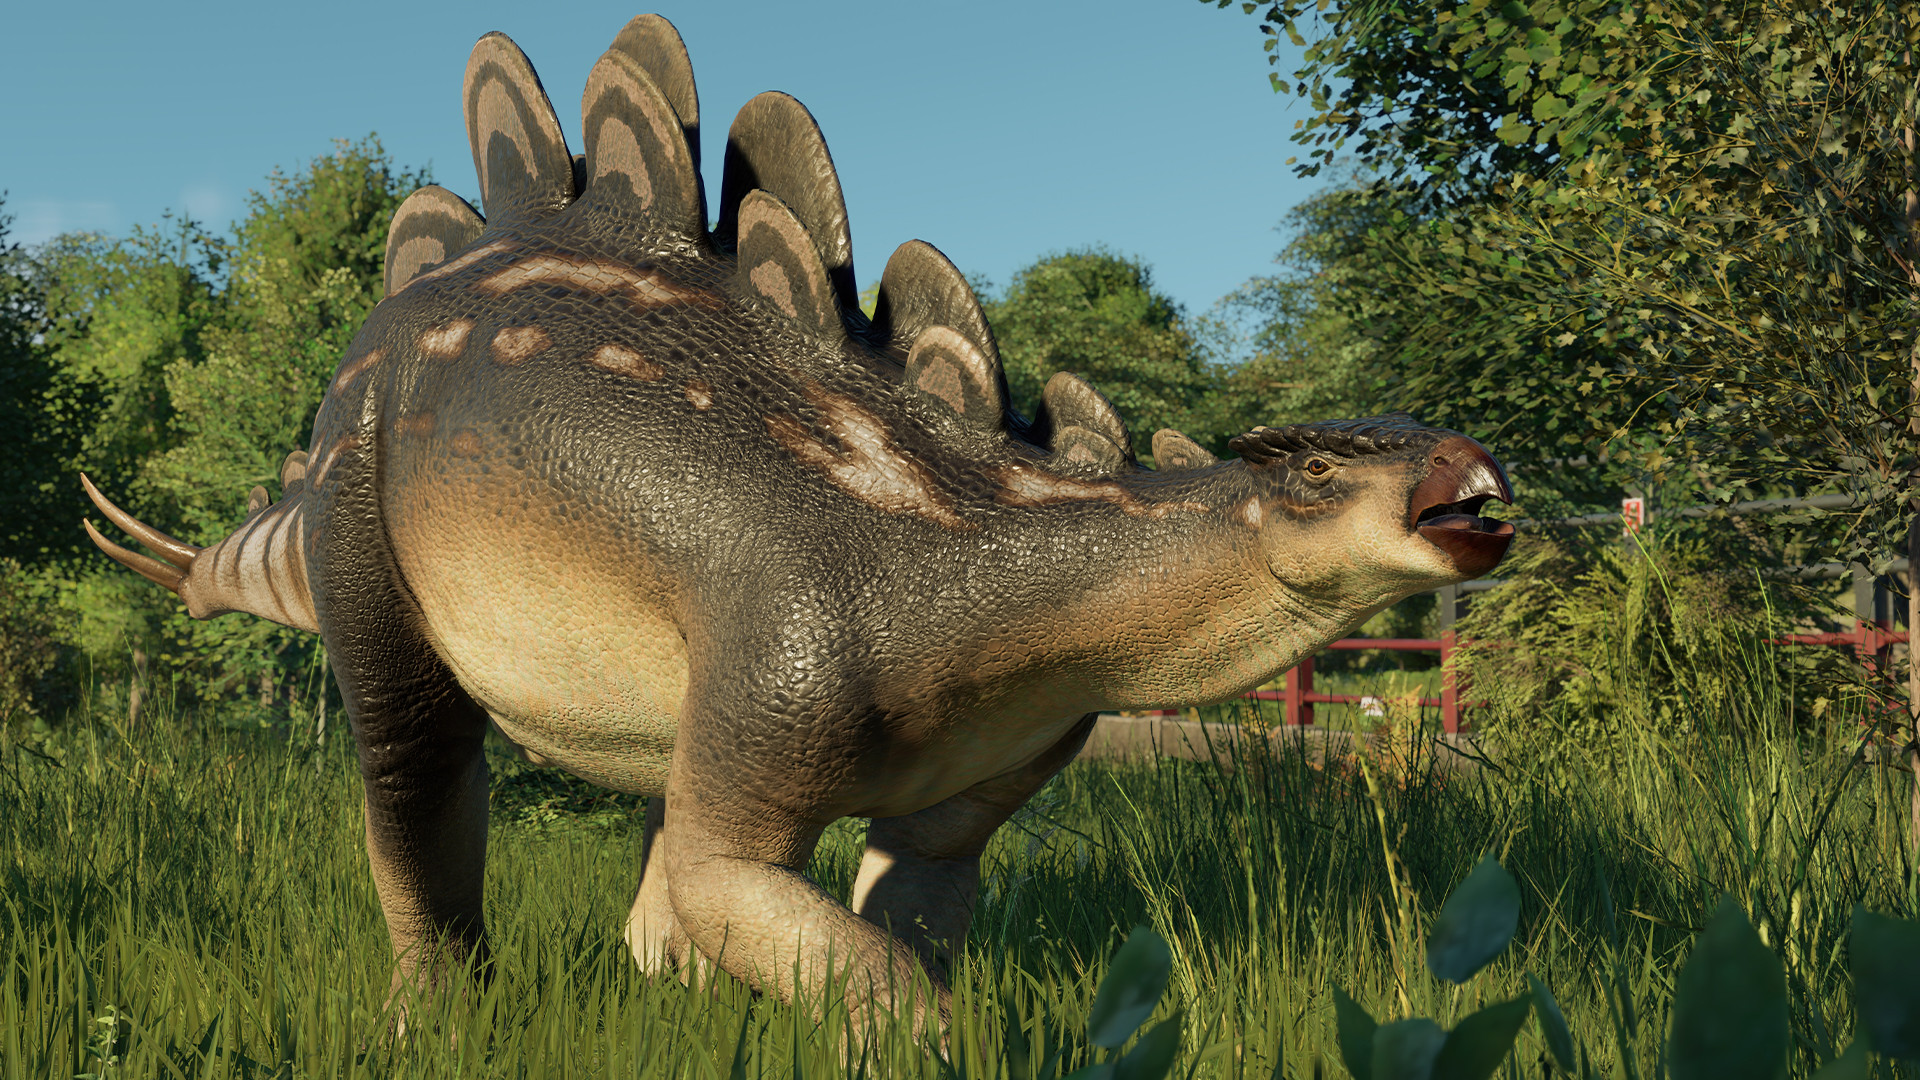 Jurassic World Evolution 2 - Early Cretaceous Pack DLC Steam Altergift